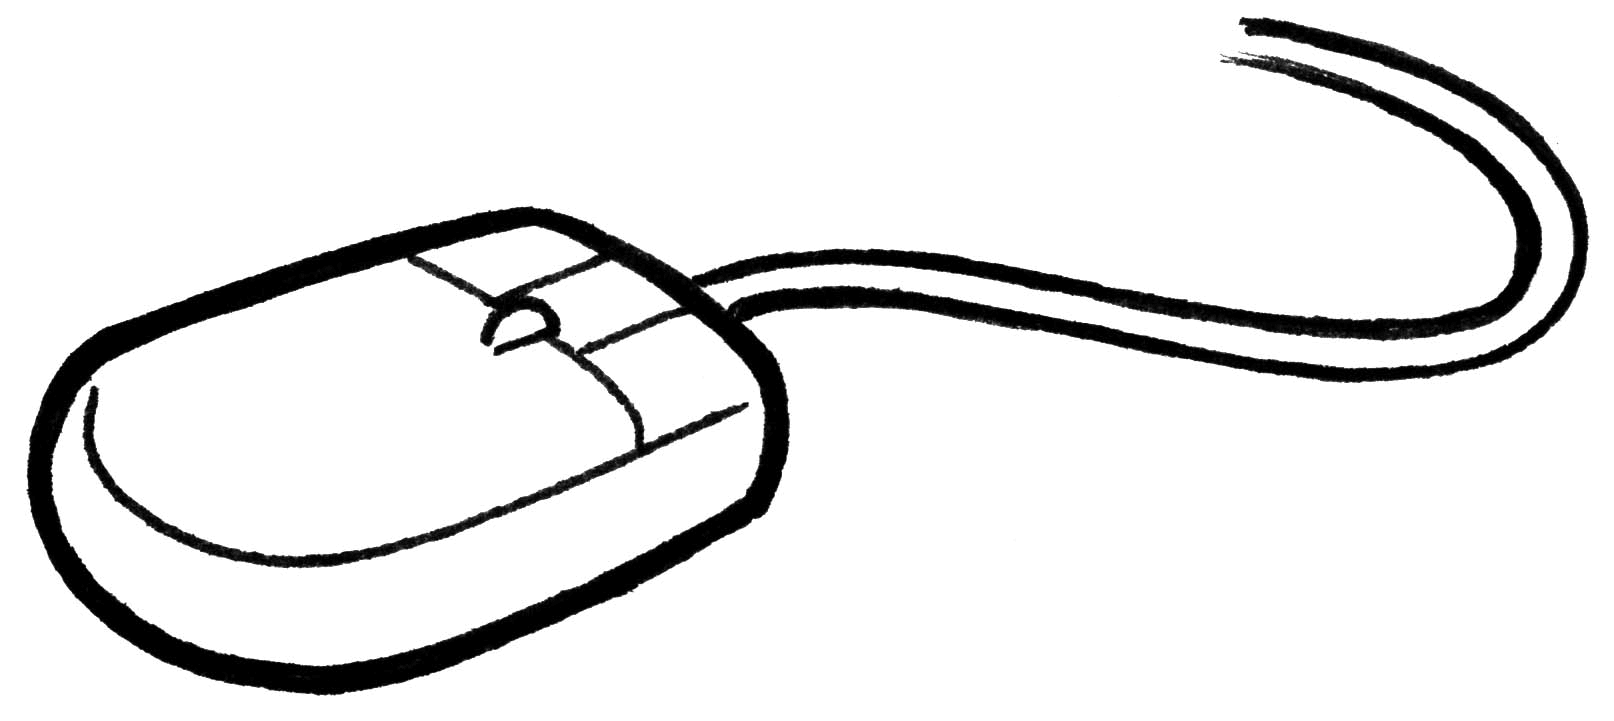 Cartoon Computer Mouse - ClipArt Best